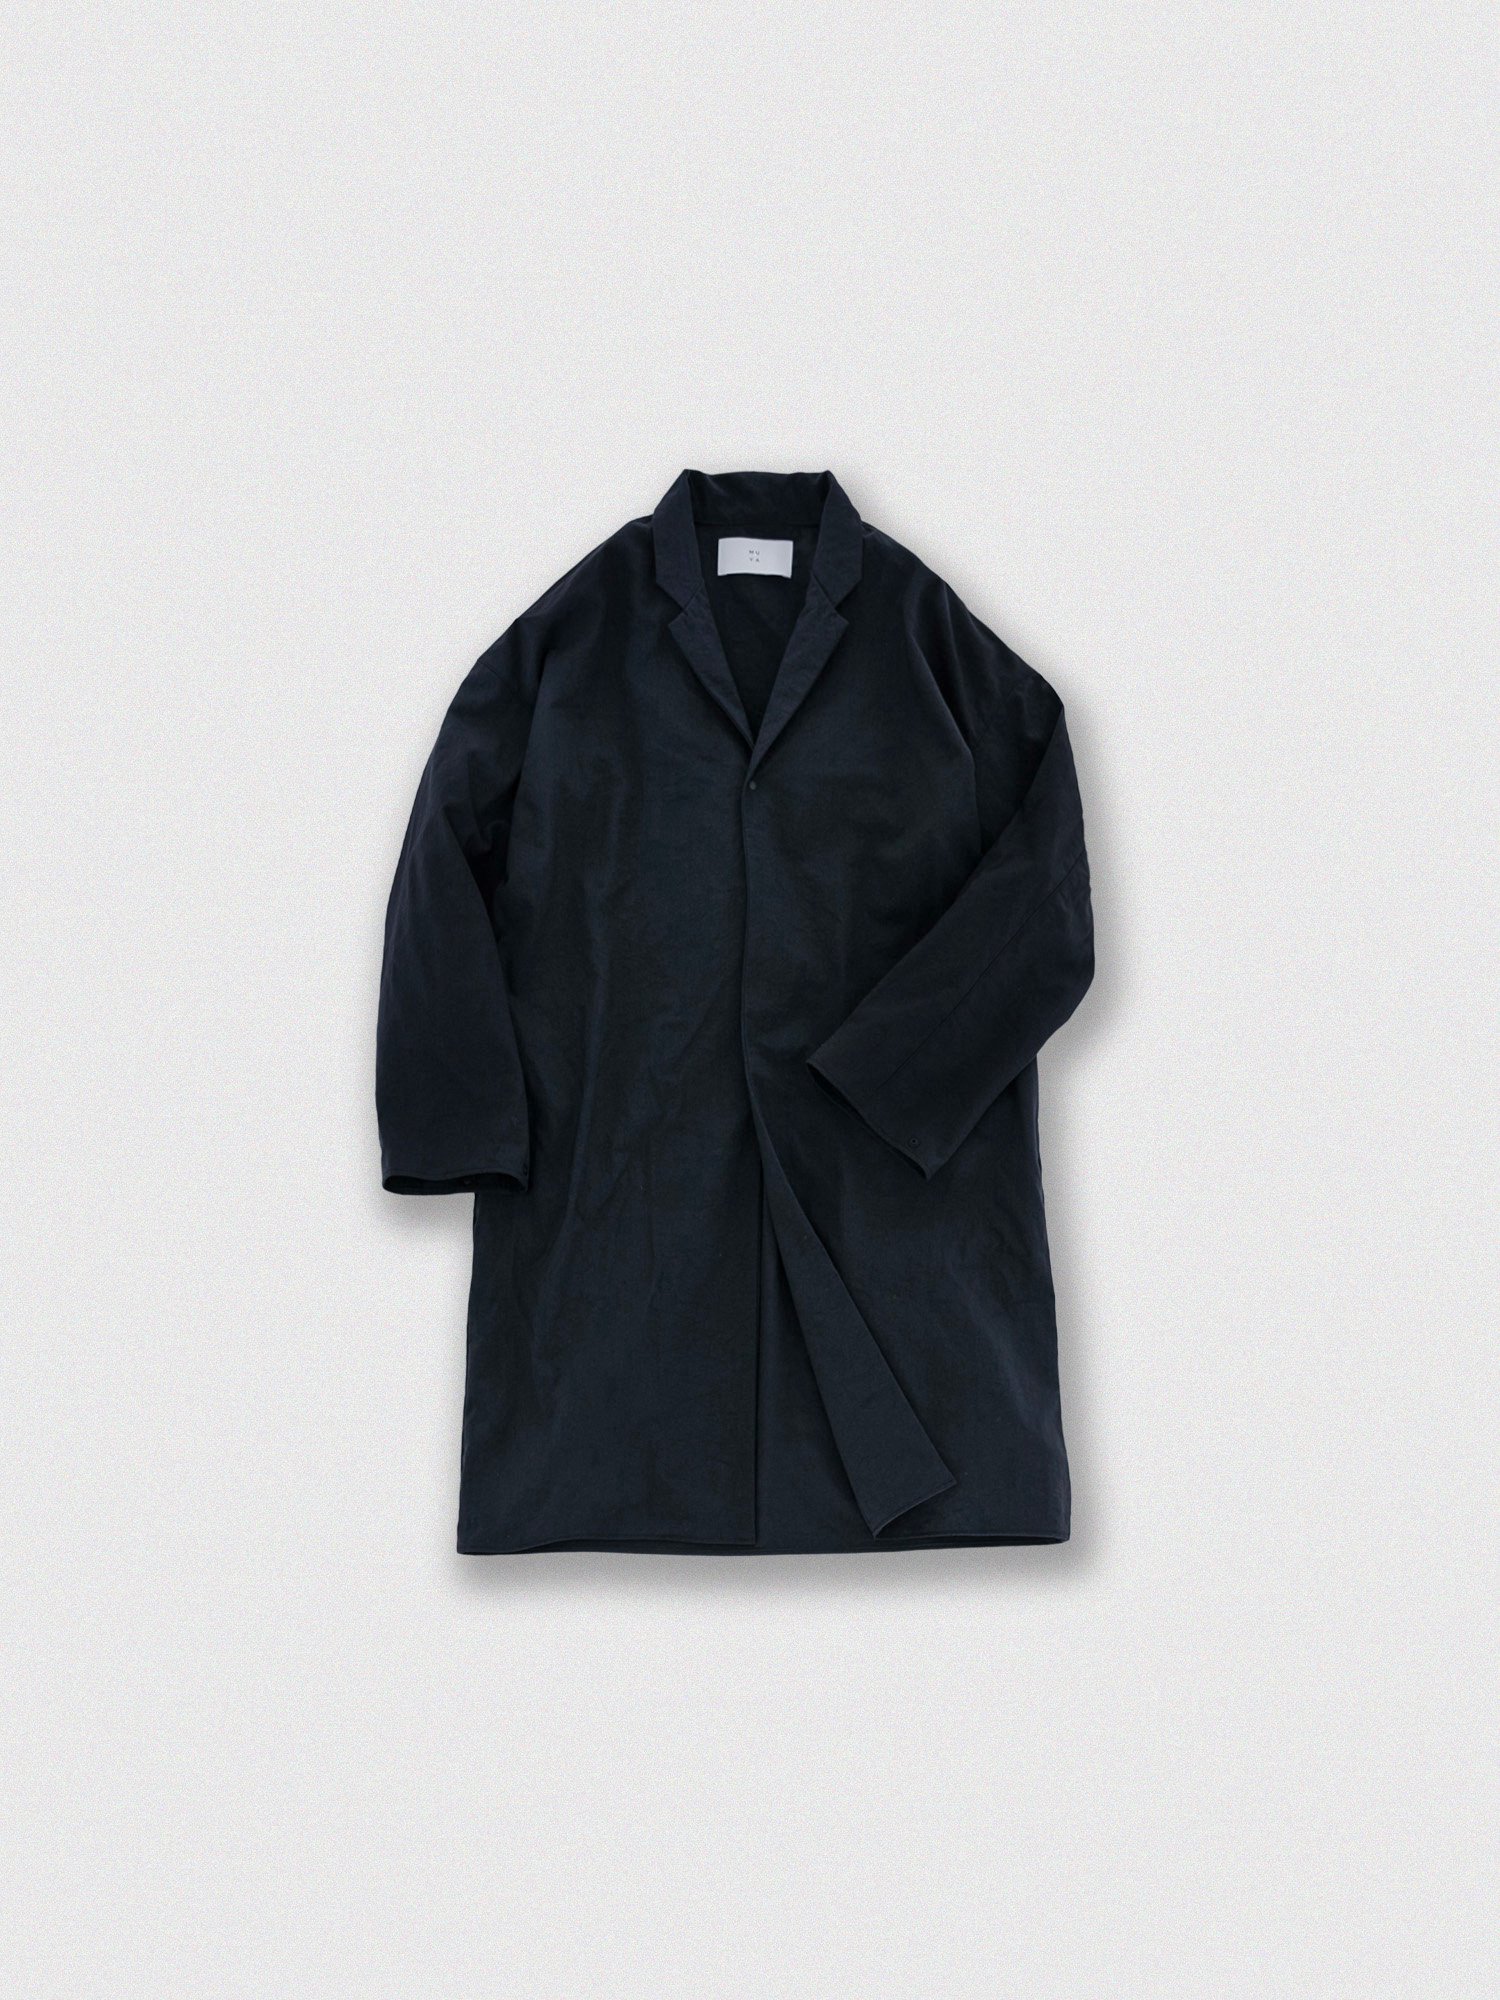 Nylon Livery coat tailored collar /3color